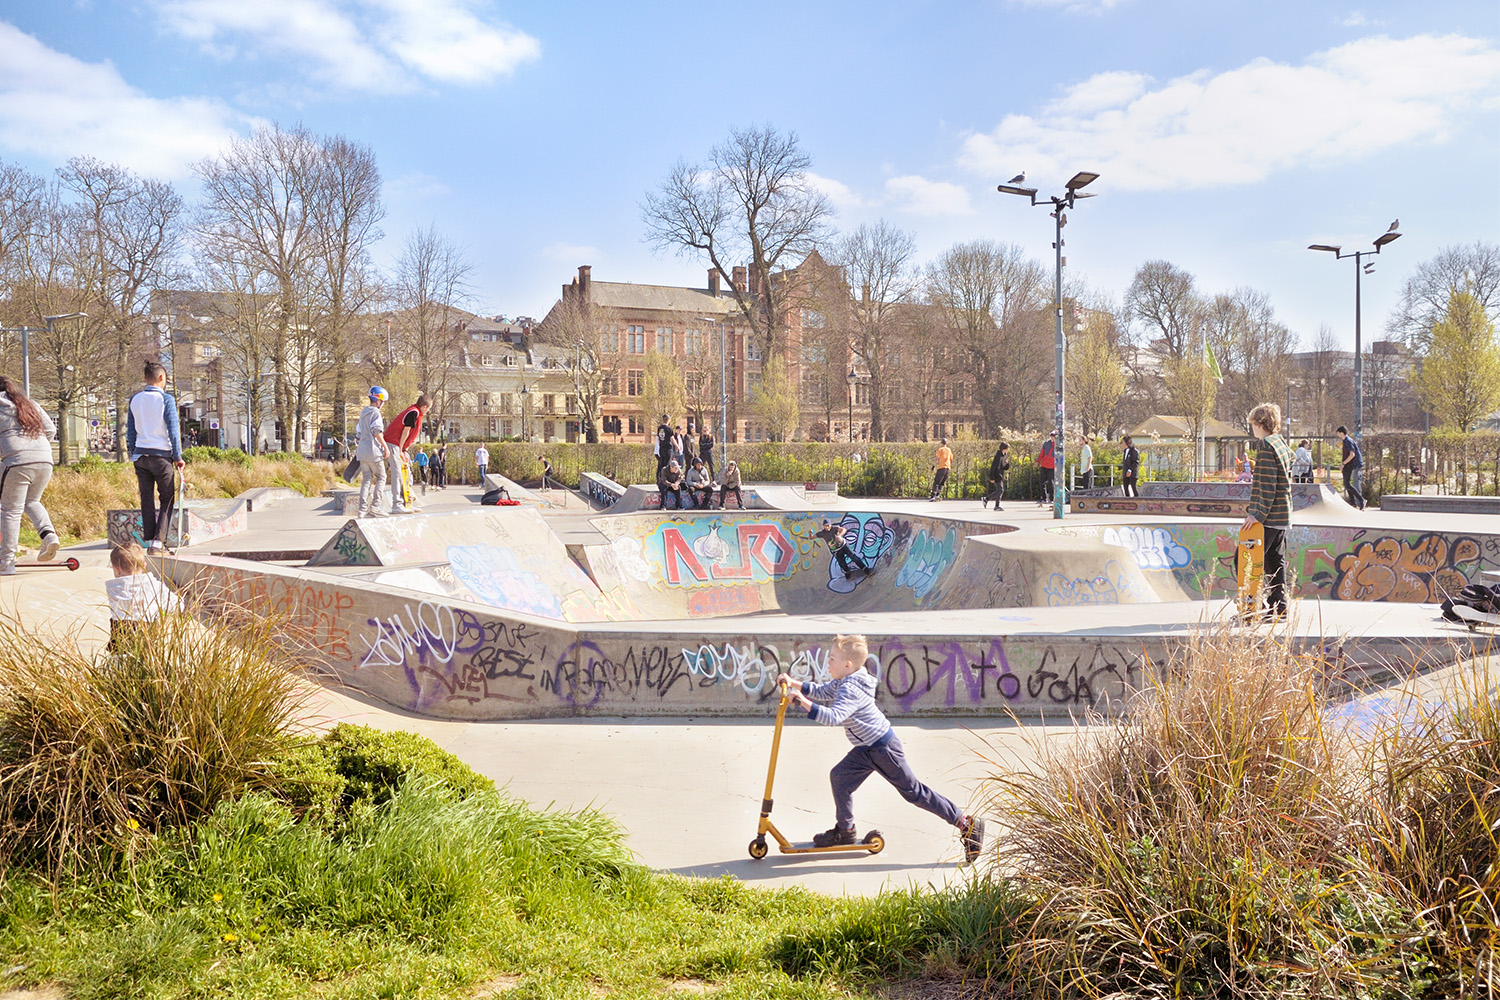 Brighton youth in a graffiti'd skate park. 